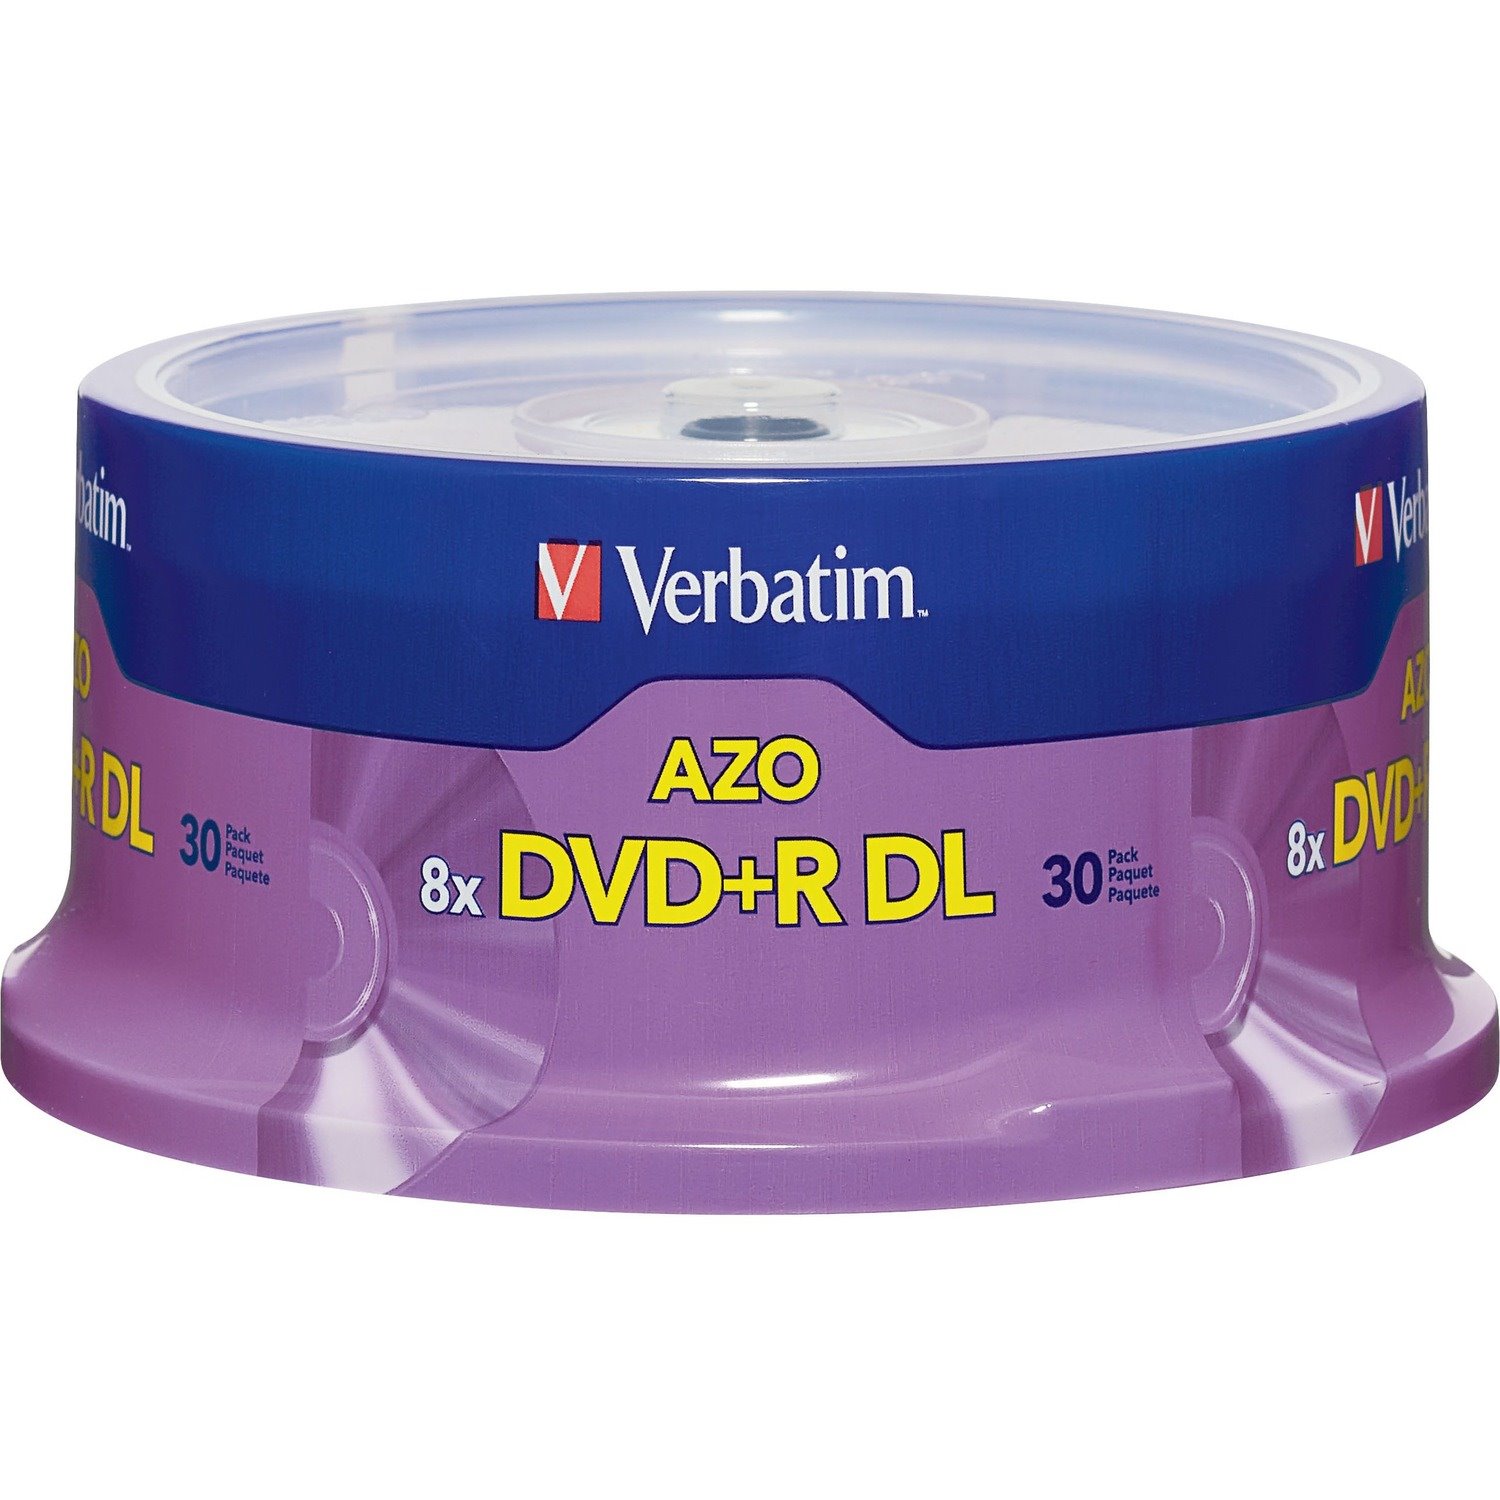 Verbatim 96542 DVD Recordable Media - DVD+R DL - 8x - 8.50 GB - 30 Pack Spindle - Silver